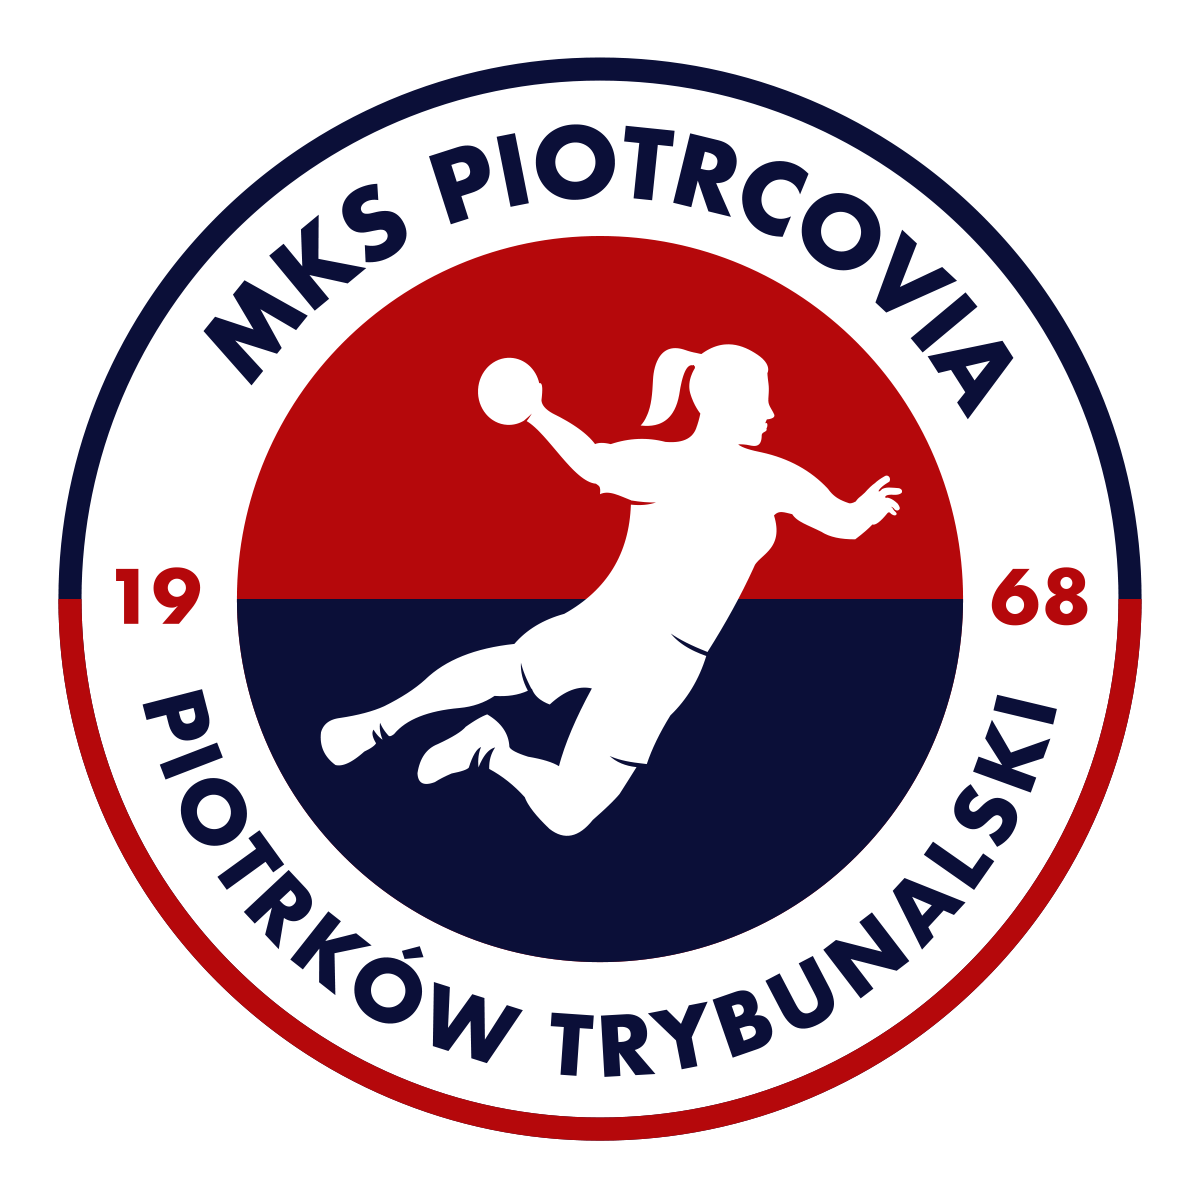 MKS Piotrcovia - logo